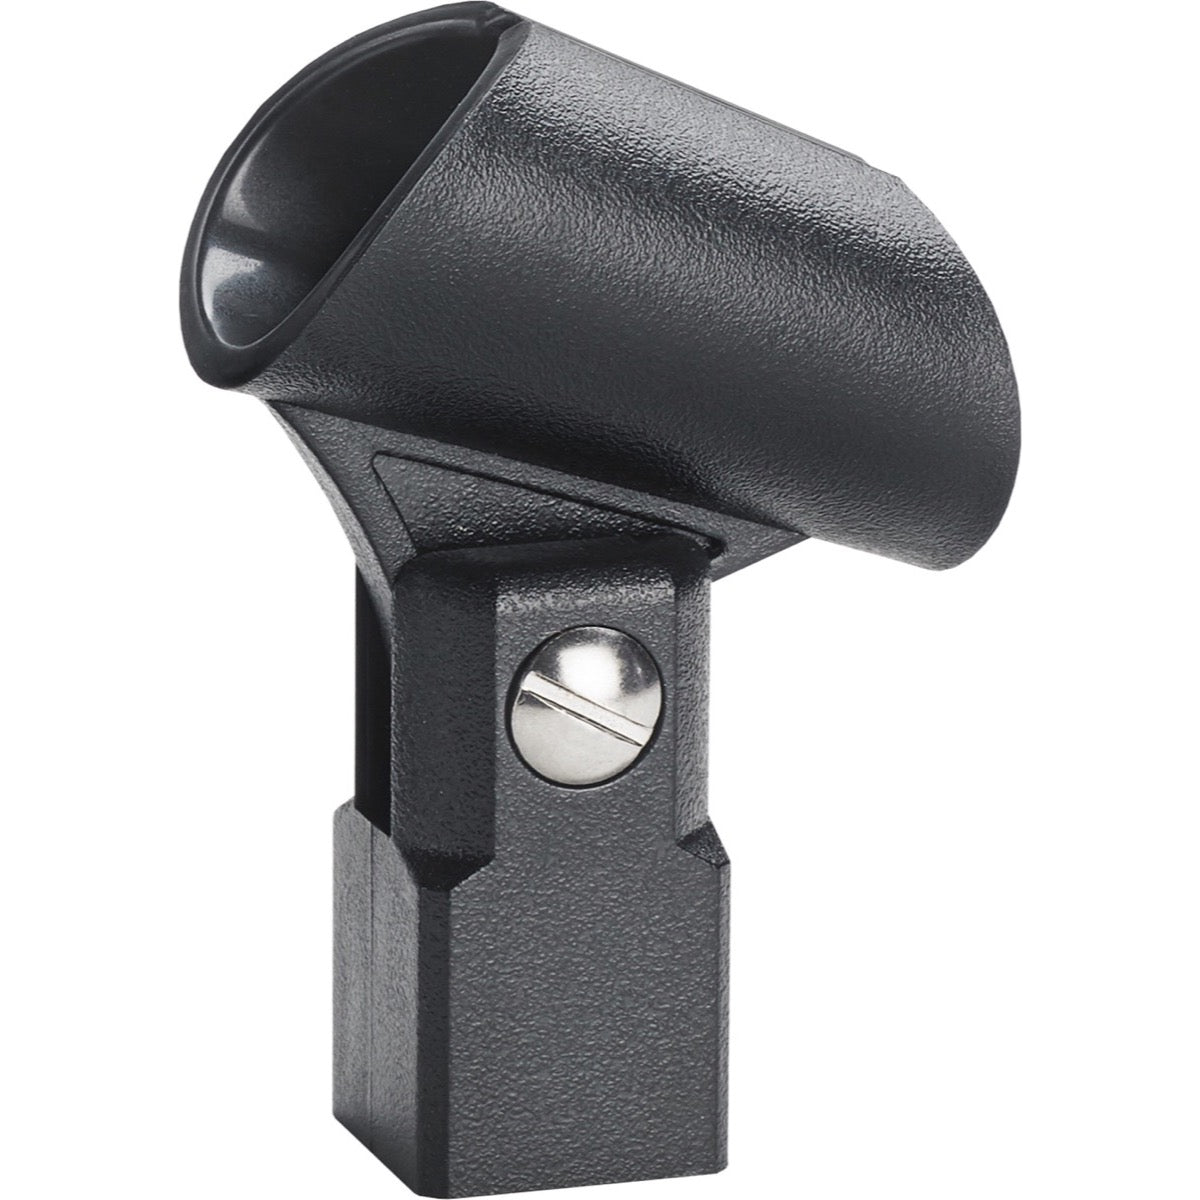 Audio-Technica ATR1500x Unidirectional Dynamic Handheld Vocal Microphone